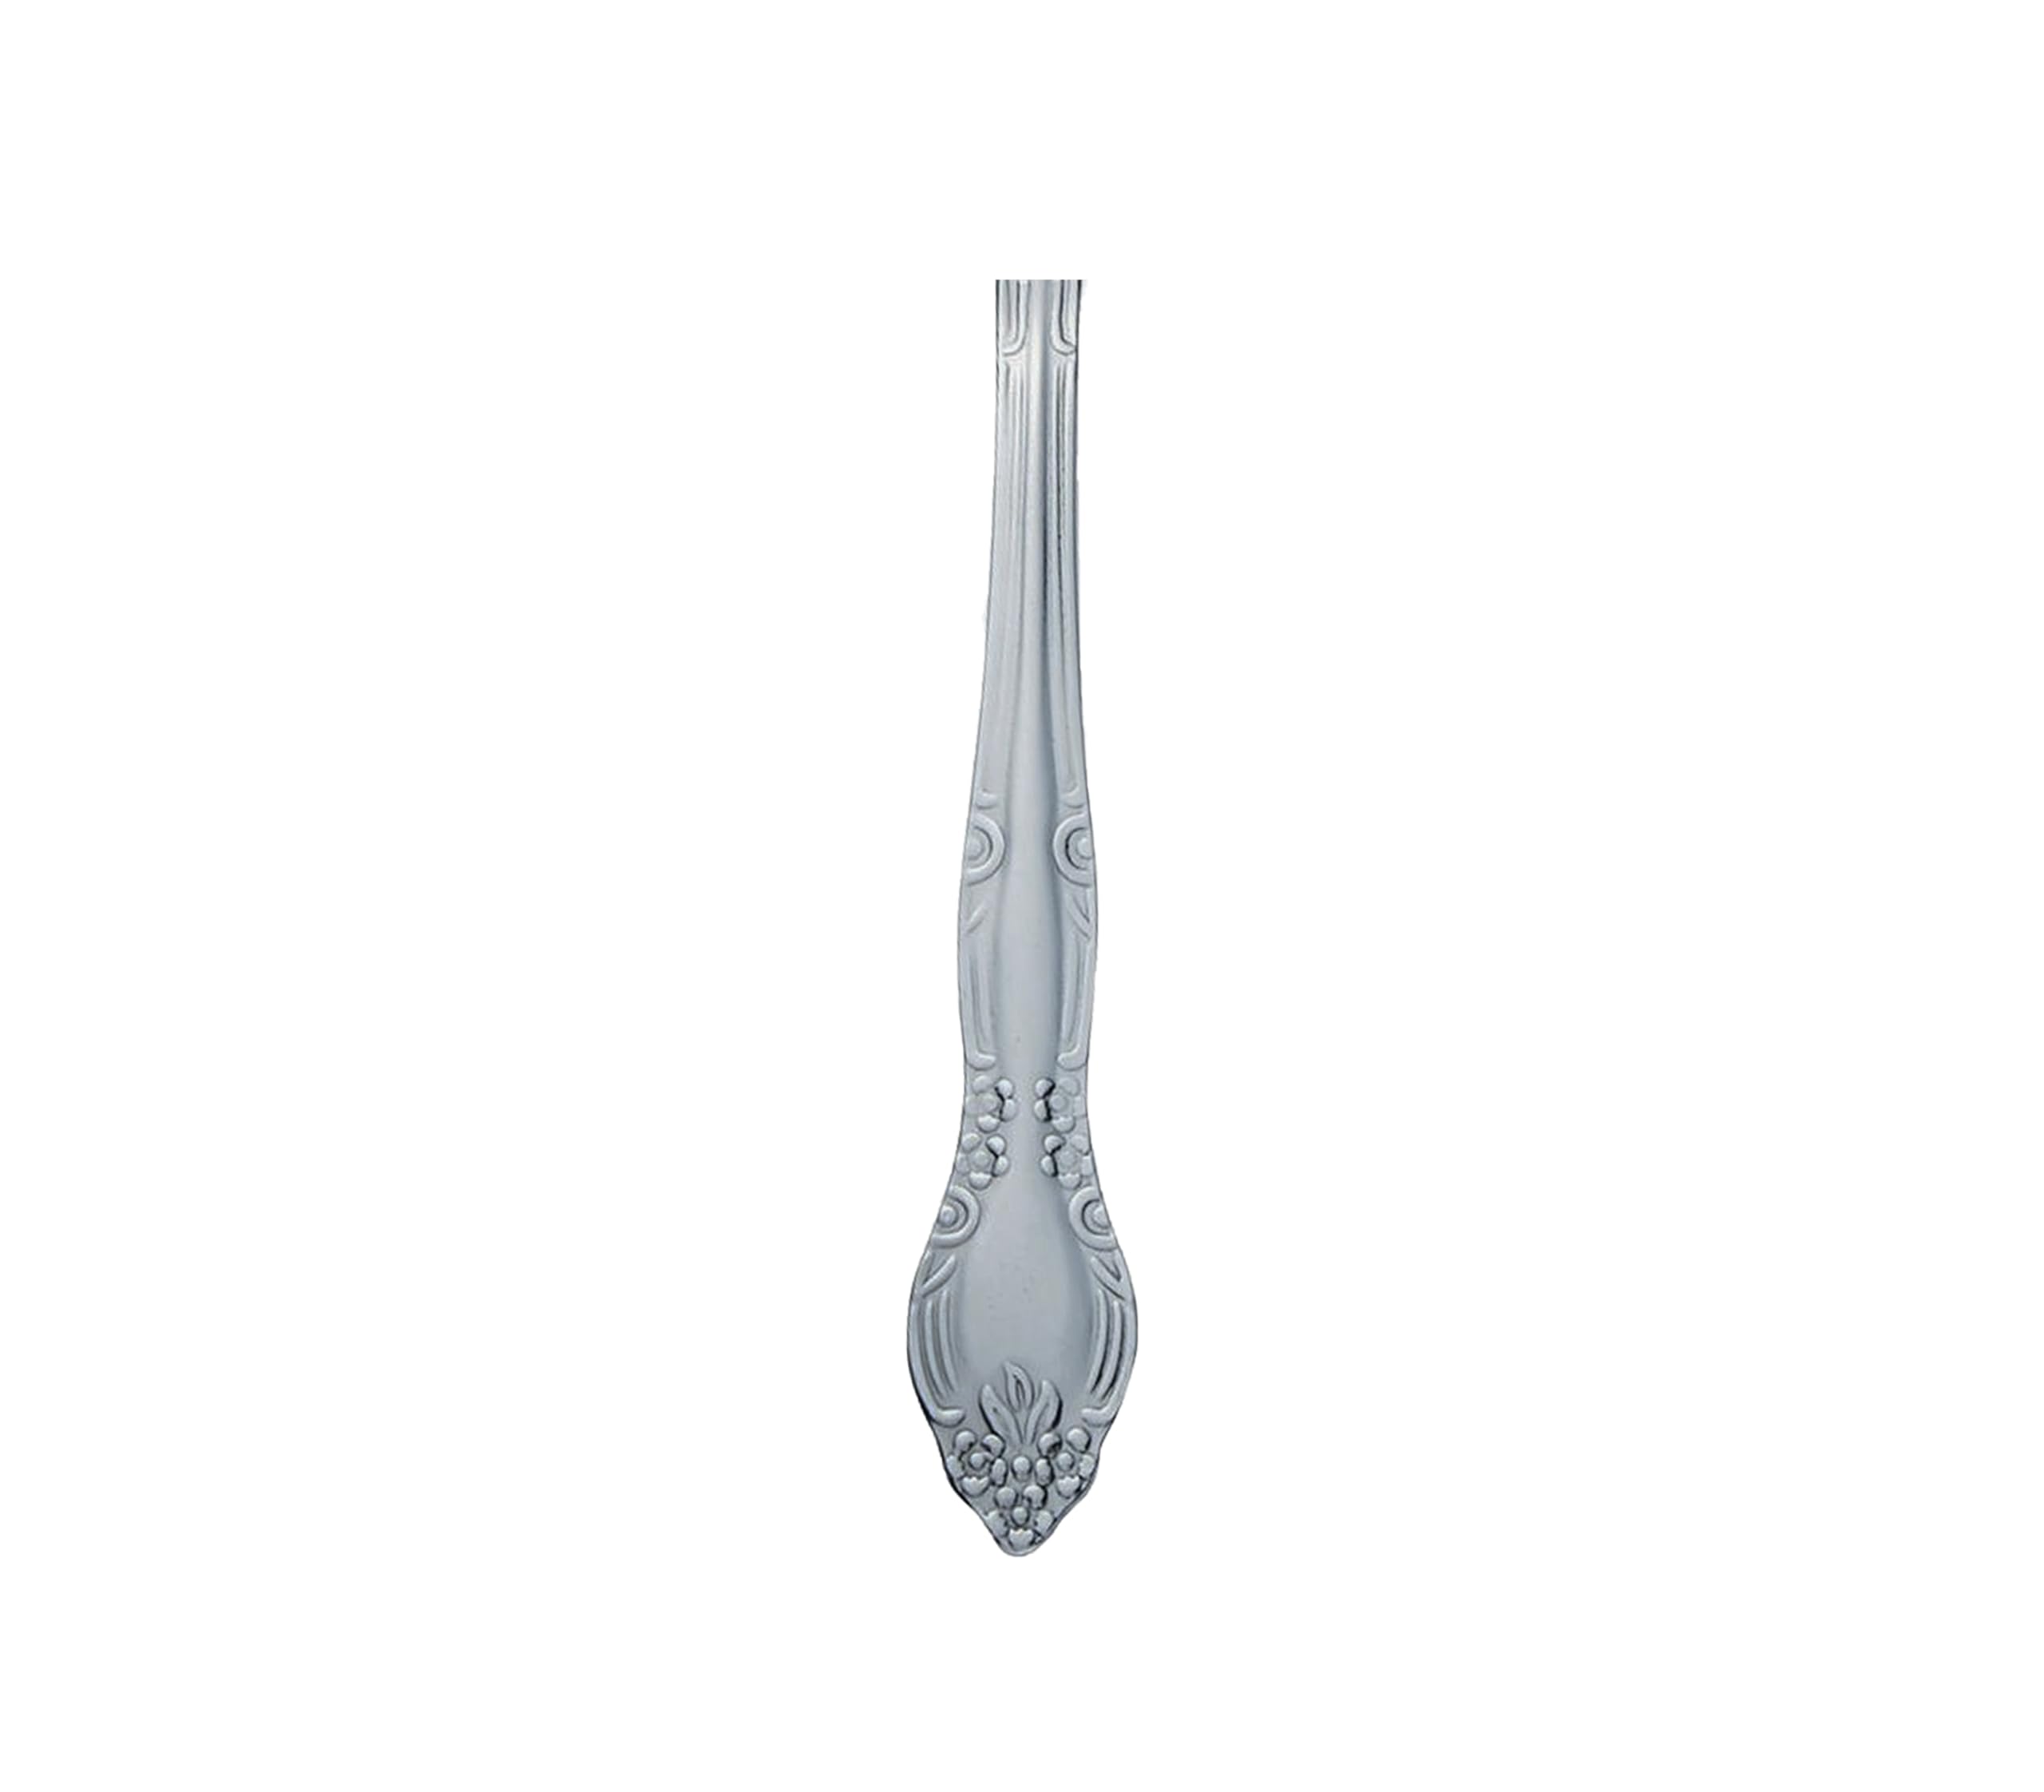 Bon Flora 20-Piece Stainless Steel Flatware Silverware Cutlery Set, Include Knife/Fork/Spoon, Dishwasher Safe, Service for 4